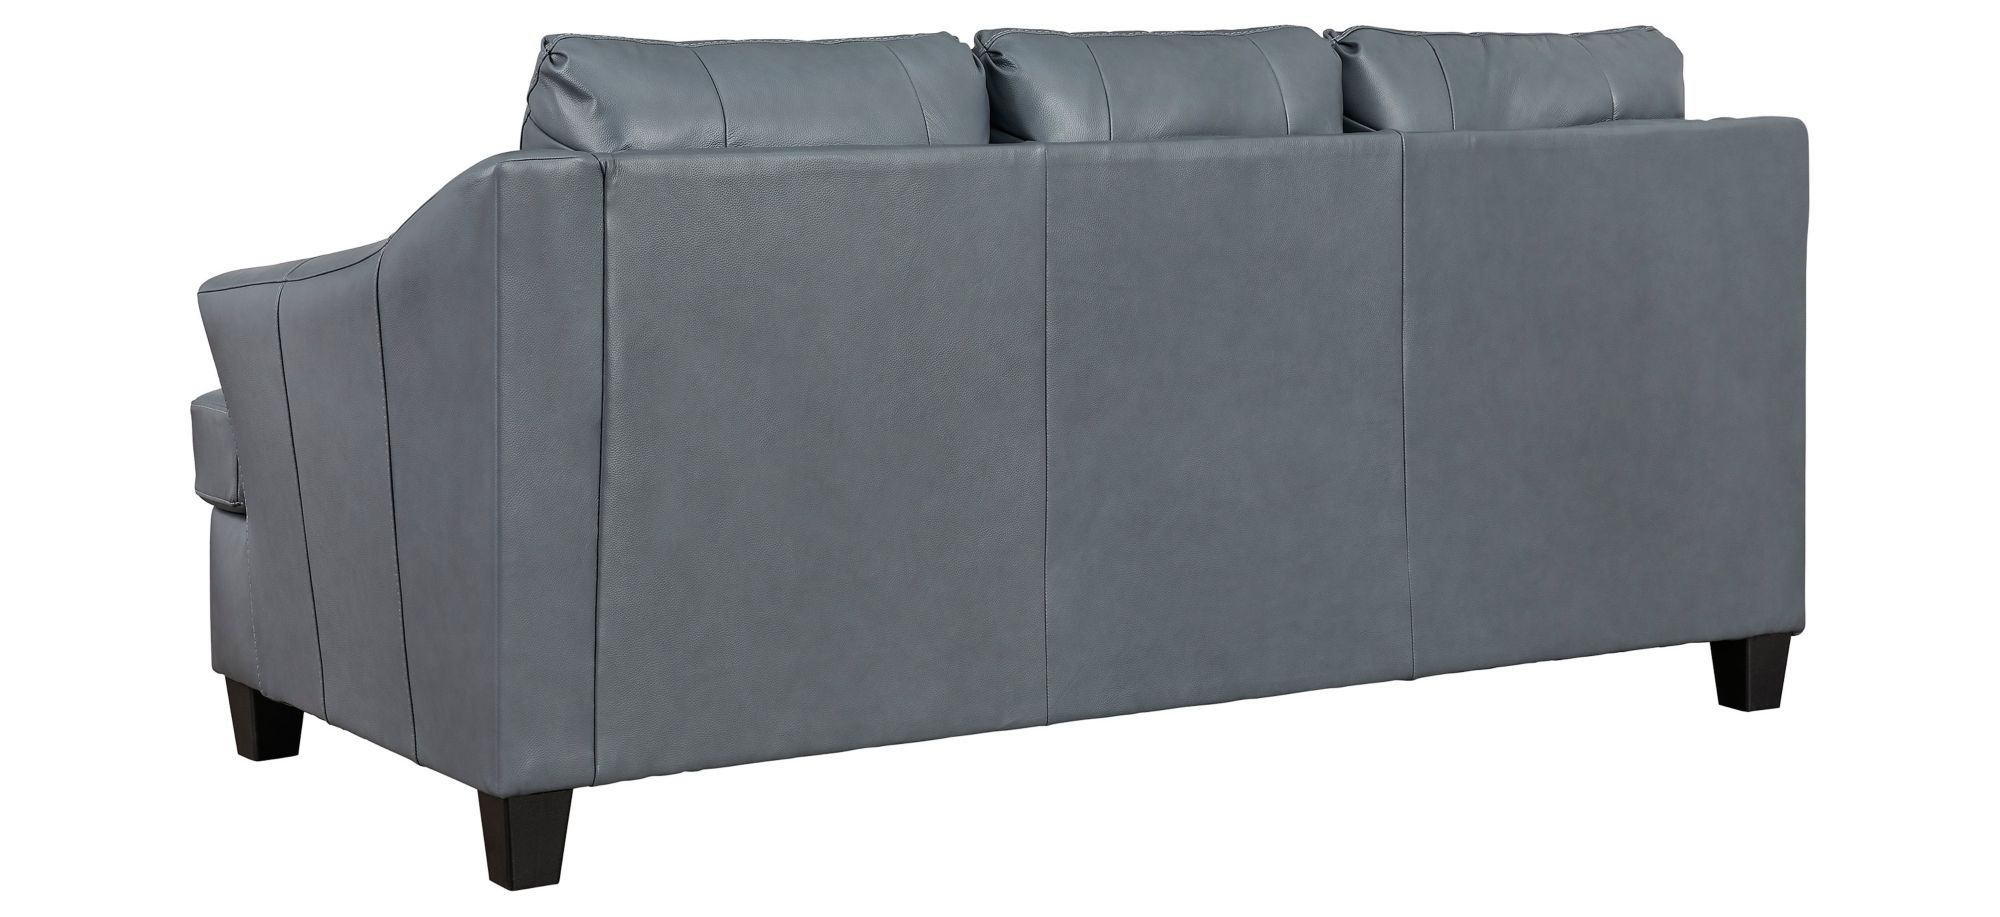 grant leather motion sofa 100306